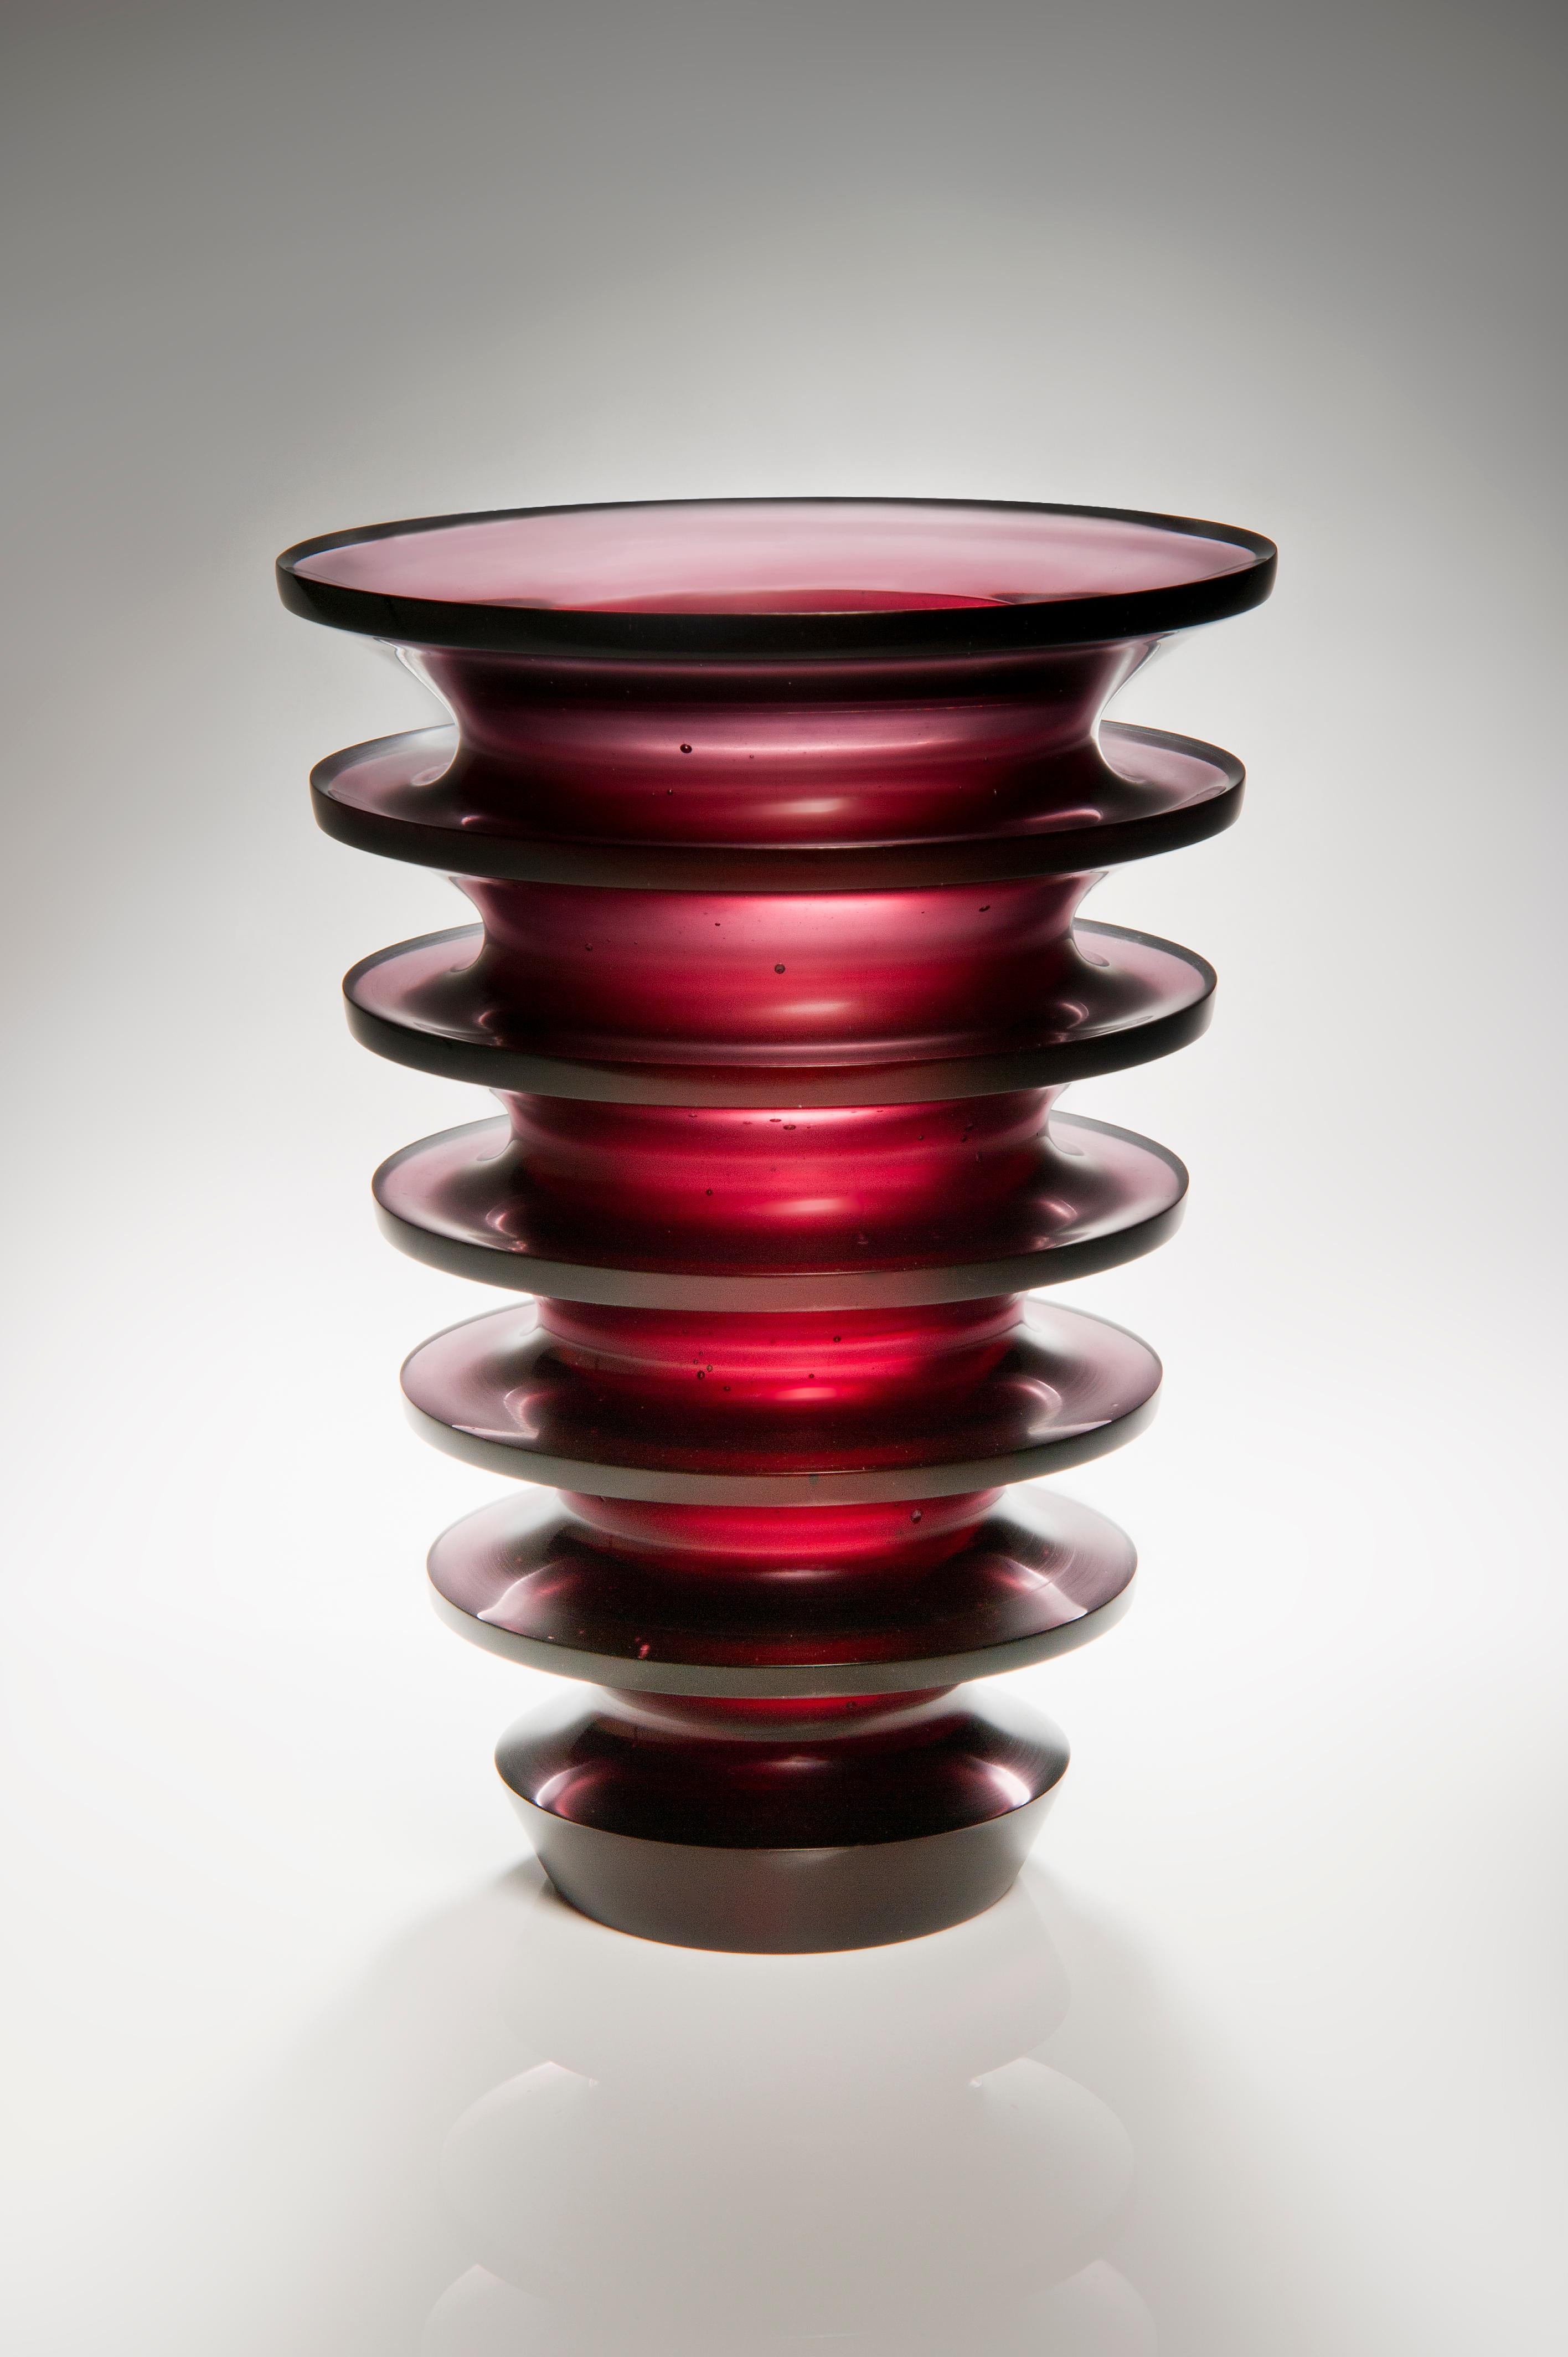 Glass Leila, a unique dark purple / blackberry coloured glass vase by Paul Stopler